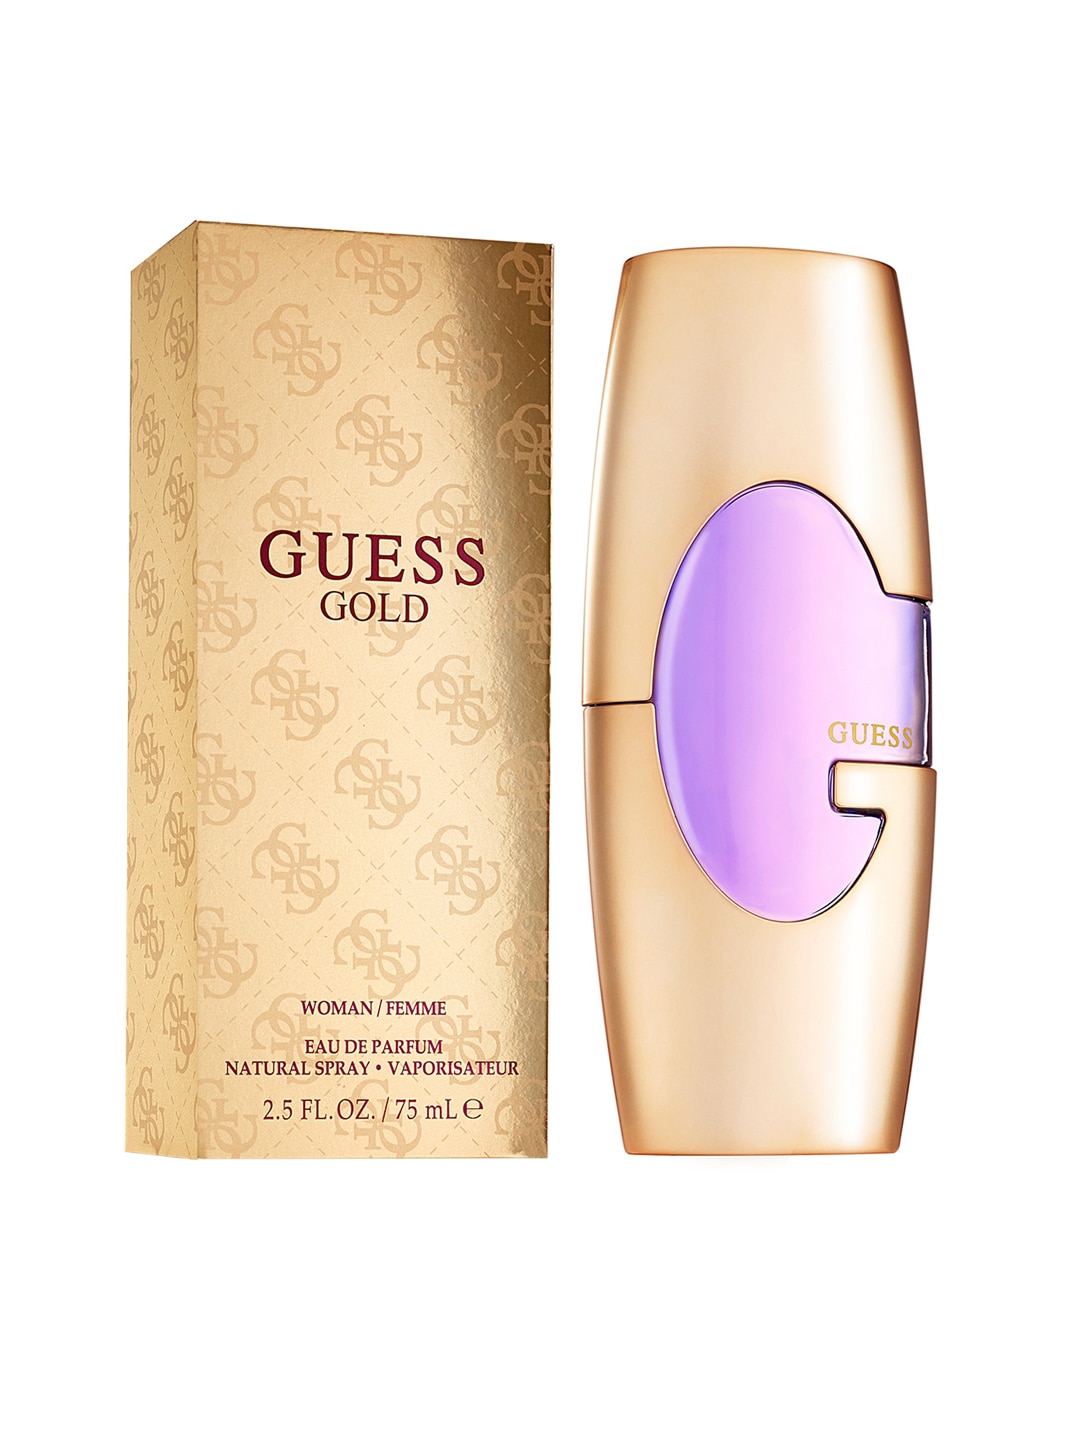 GUESS Gold Eau de Parfum 75ml Price in India